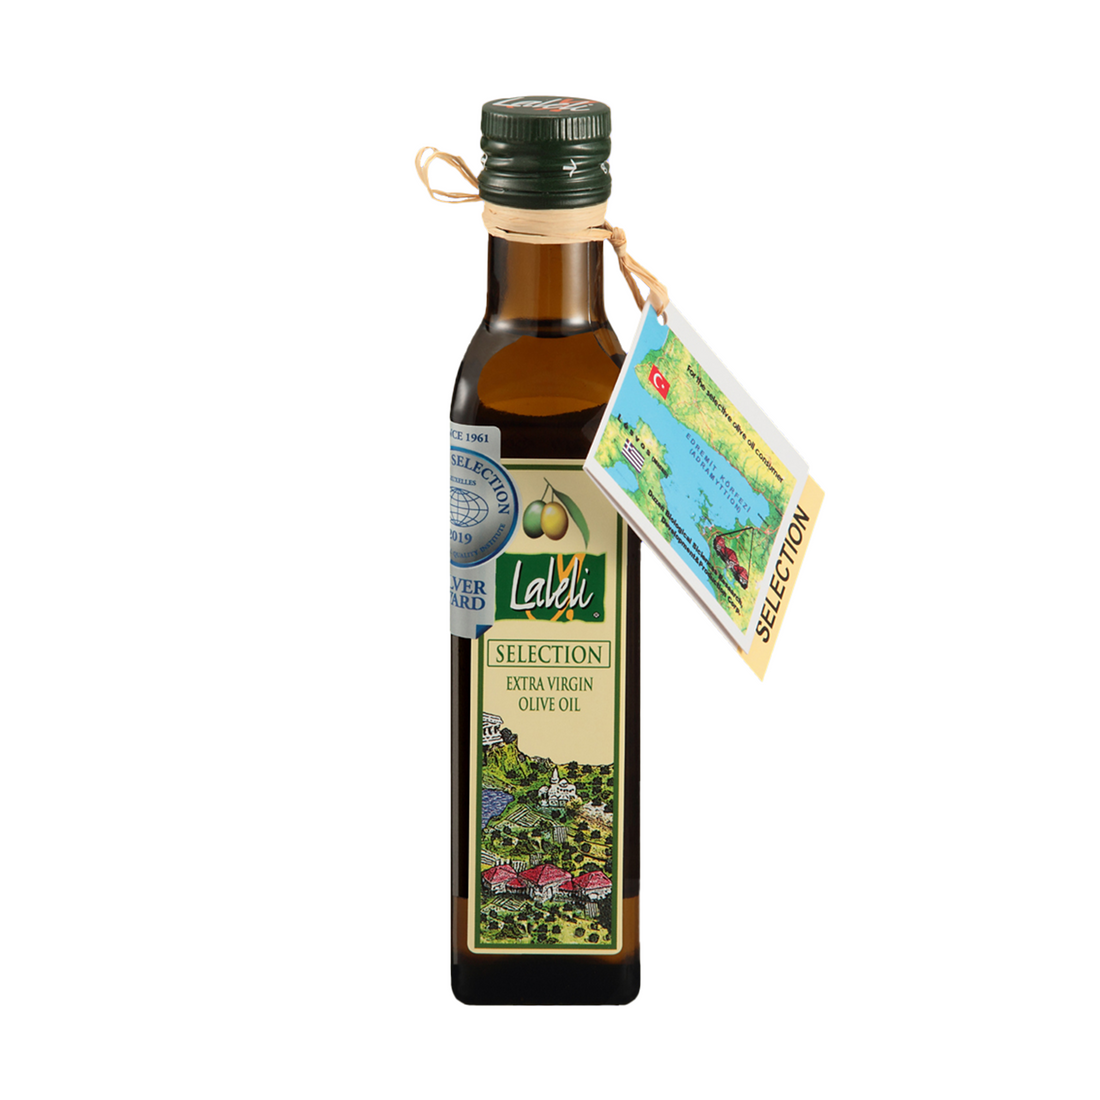 Laleli Extra Virgin Olive Oil Selection 250ml | Laleli Naturel Sizma Zeytinyagi - Selection | Organic Extra Virgin Olive Oil - Selection